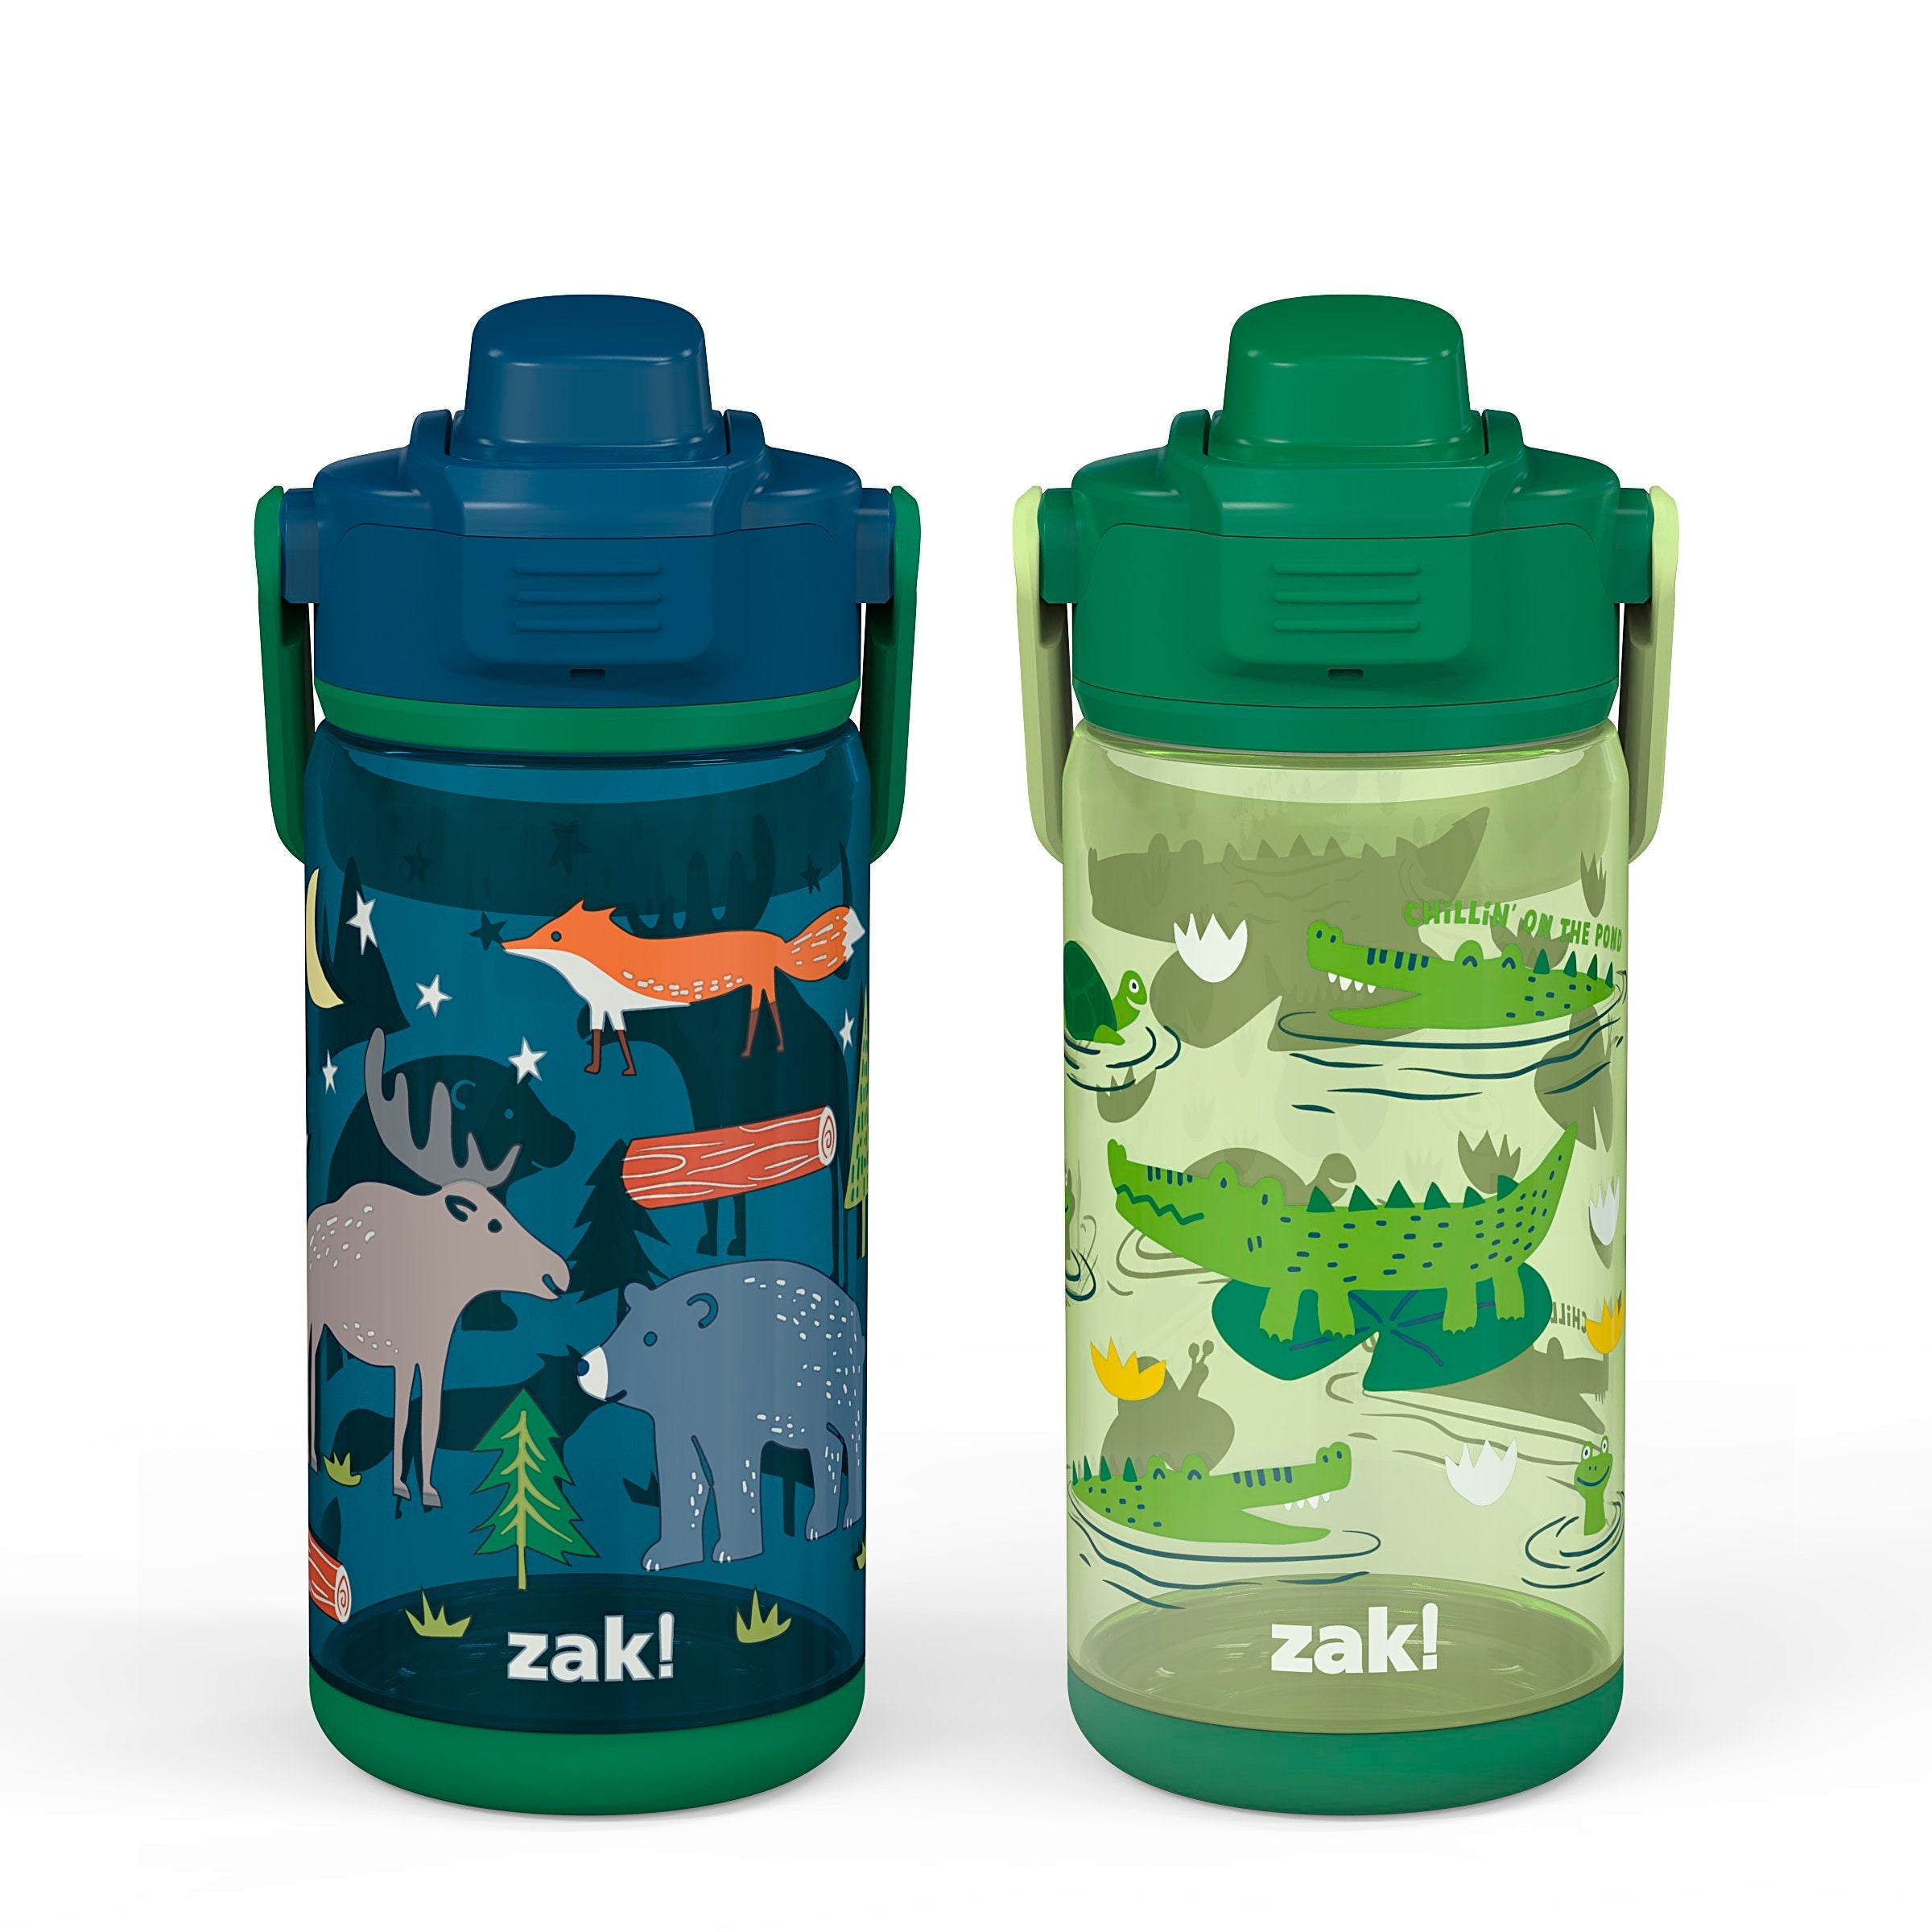 Florida Water Plastic Bottle 7.5 oz (Pack of 3)